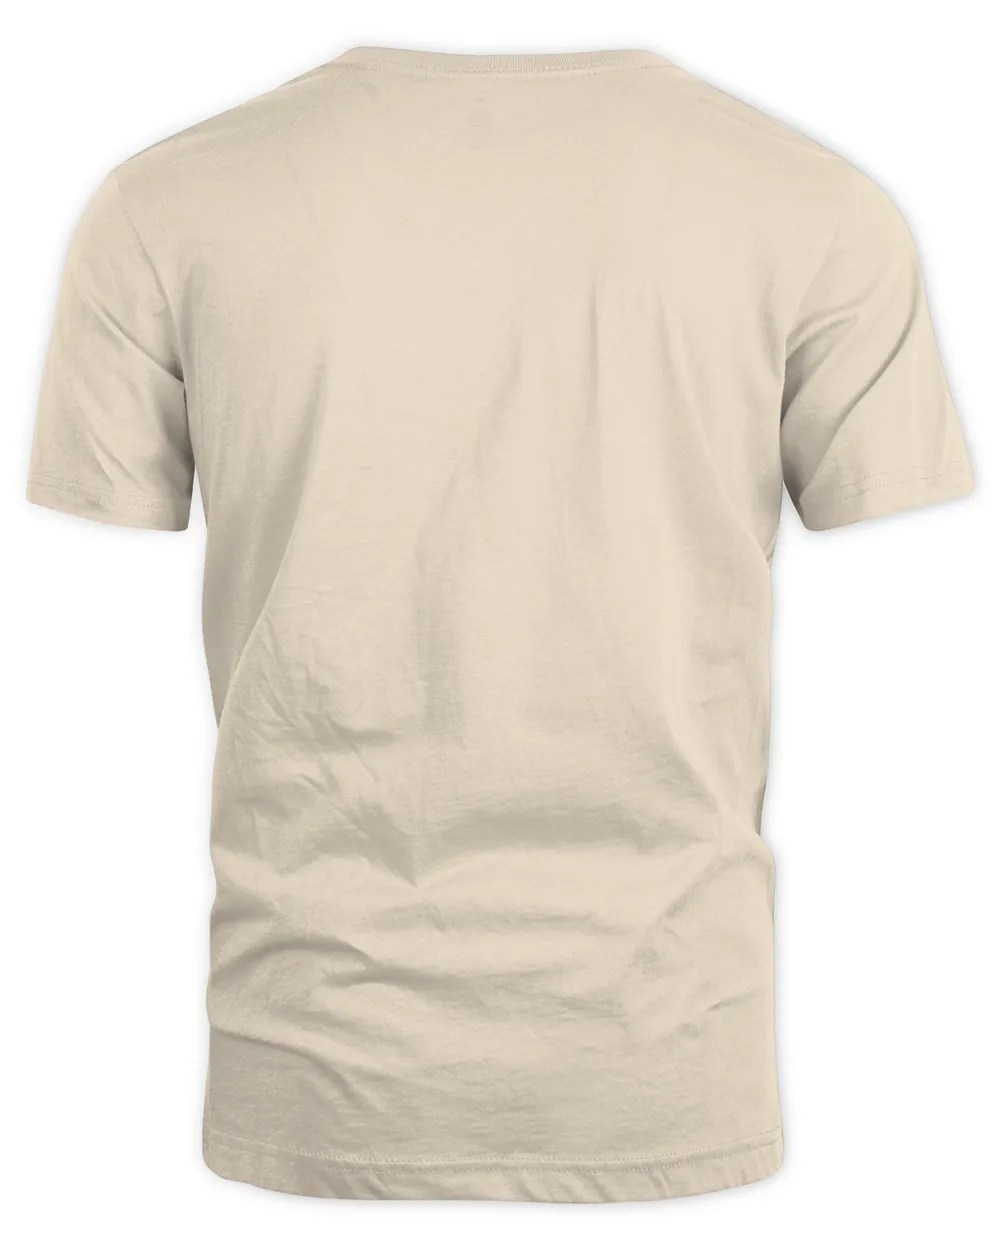 Nashville Tee, Nashville T-shirt, Music City, Tennessee Tee, Vintage Inspired Cotton T-shirt, Unisex T-shirt